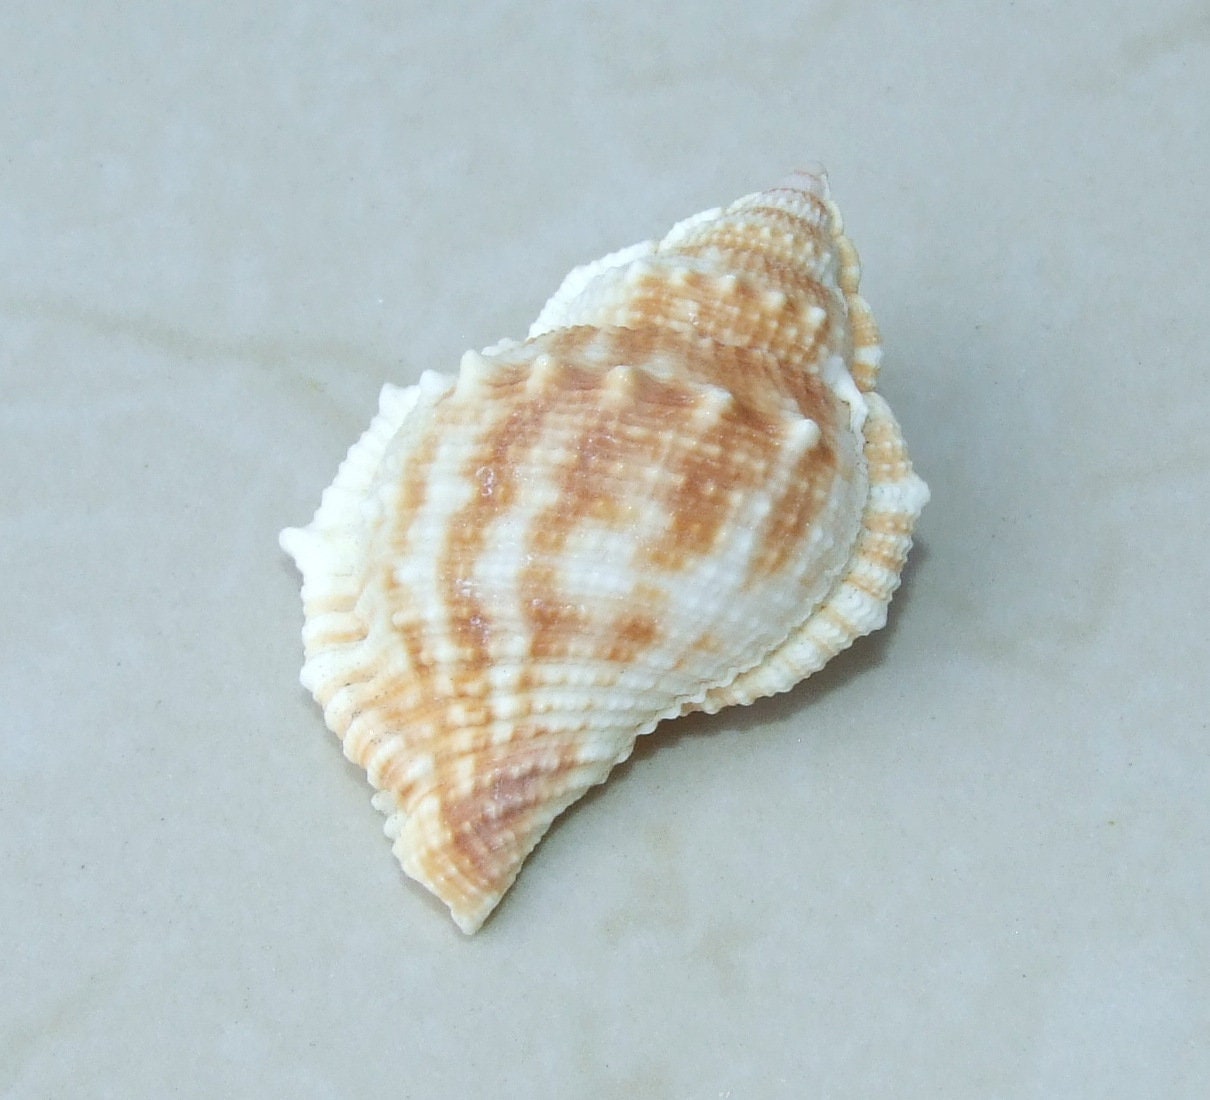 Small Strombus Canarium Conch Shells in Bulk $5.00 for 4.4 pounds